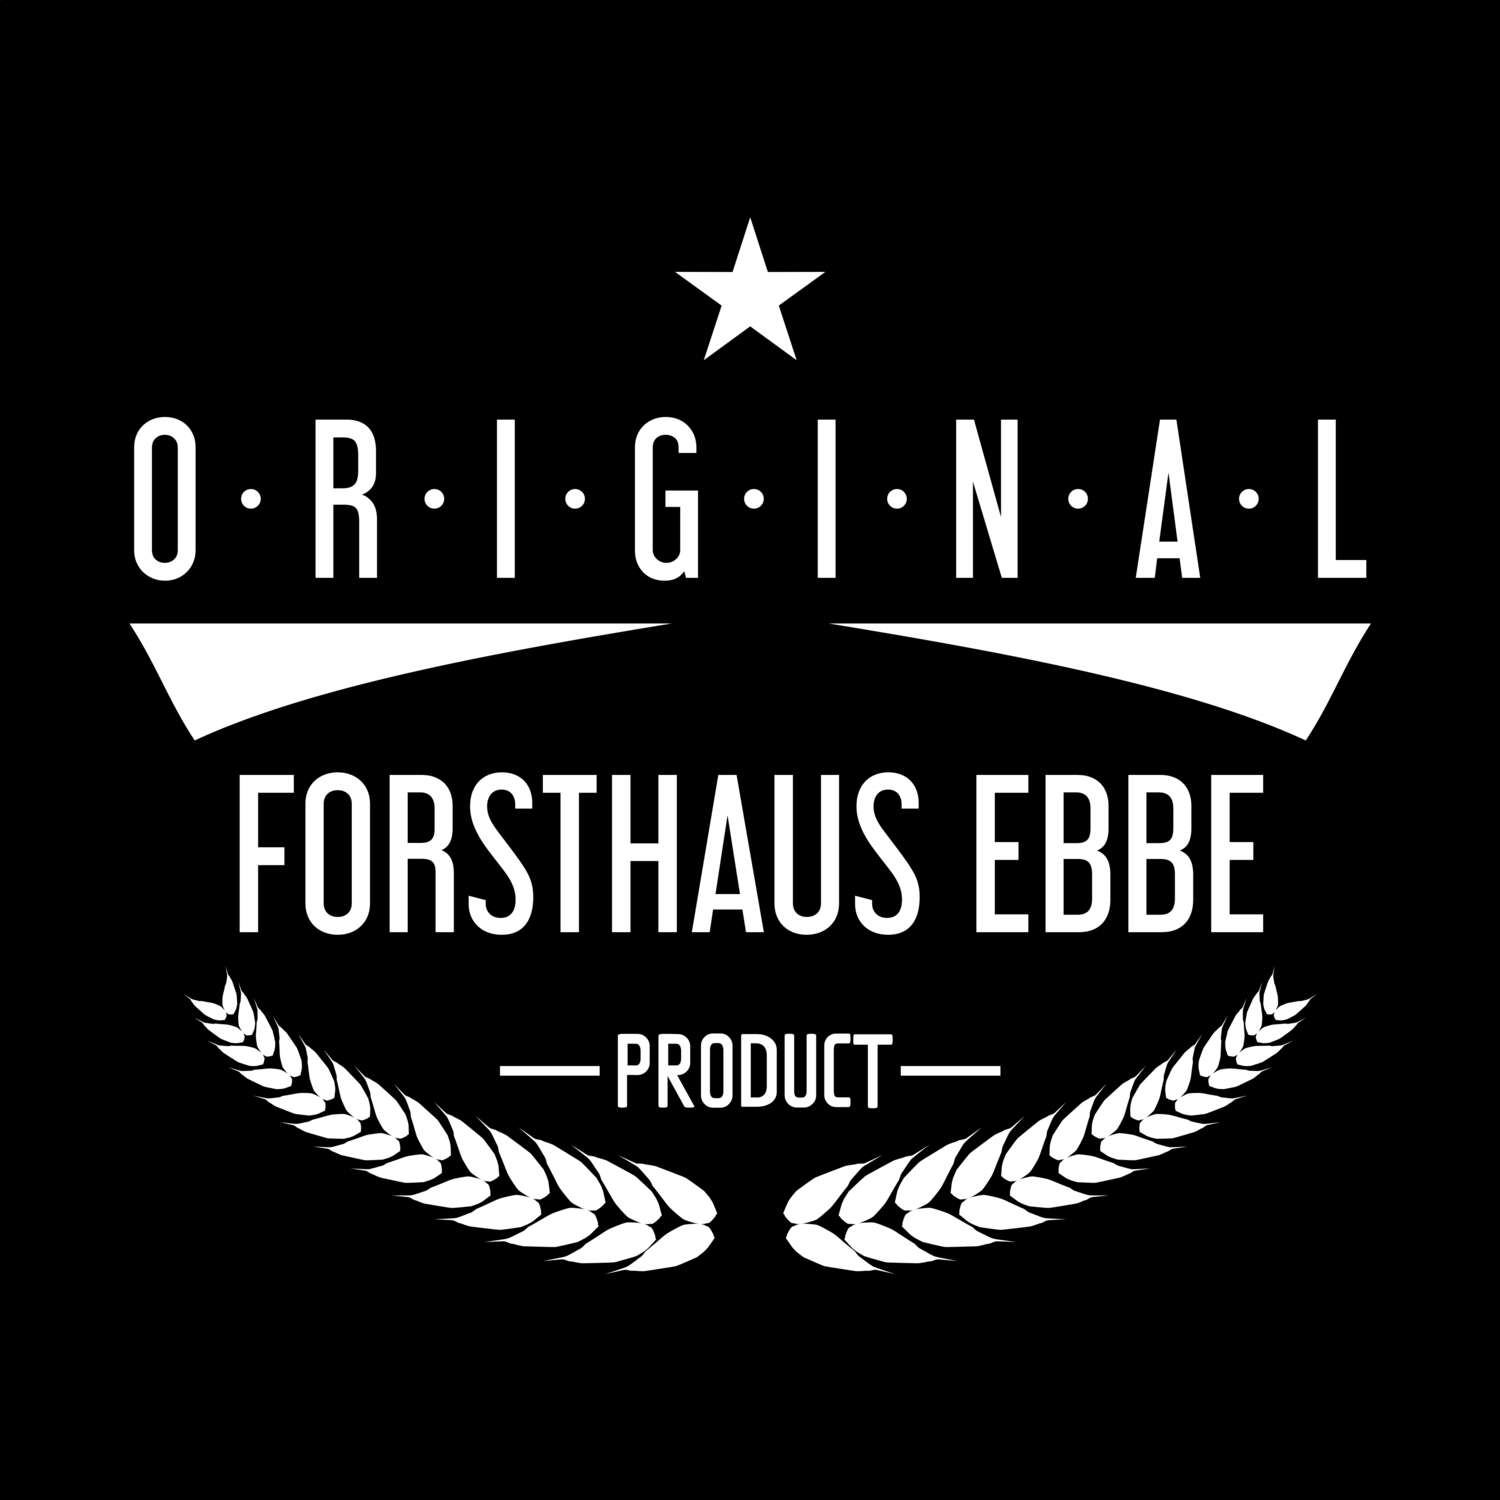 Forsthaus Ebbe T-Shirt »Original Product«